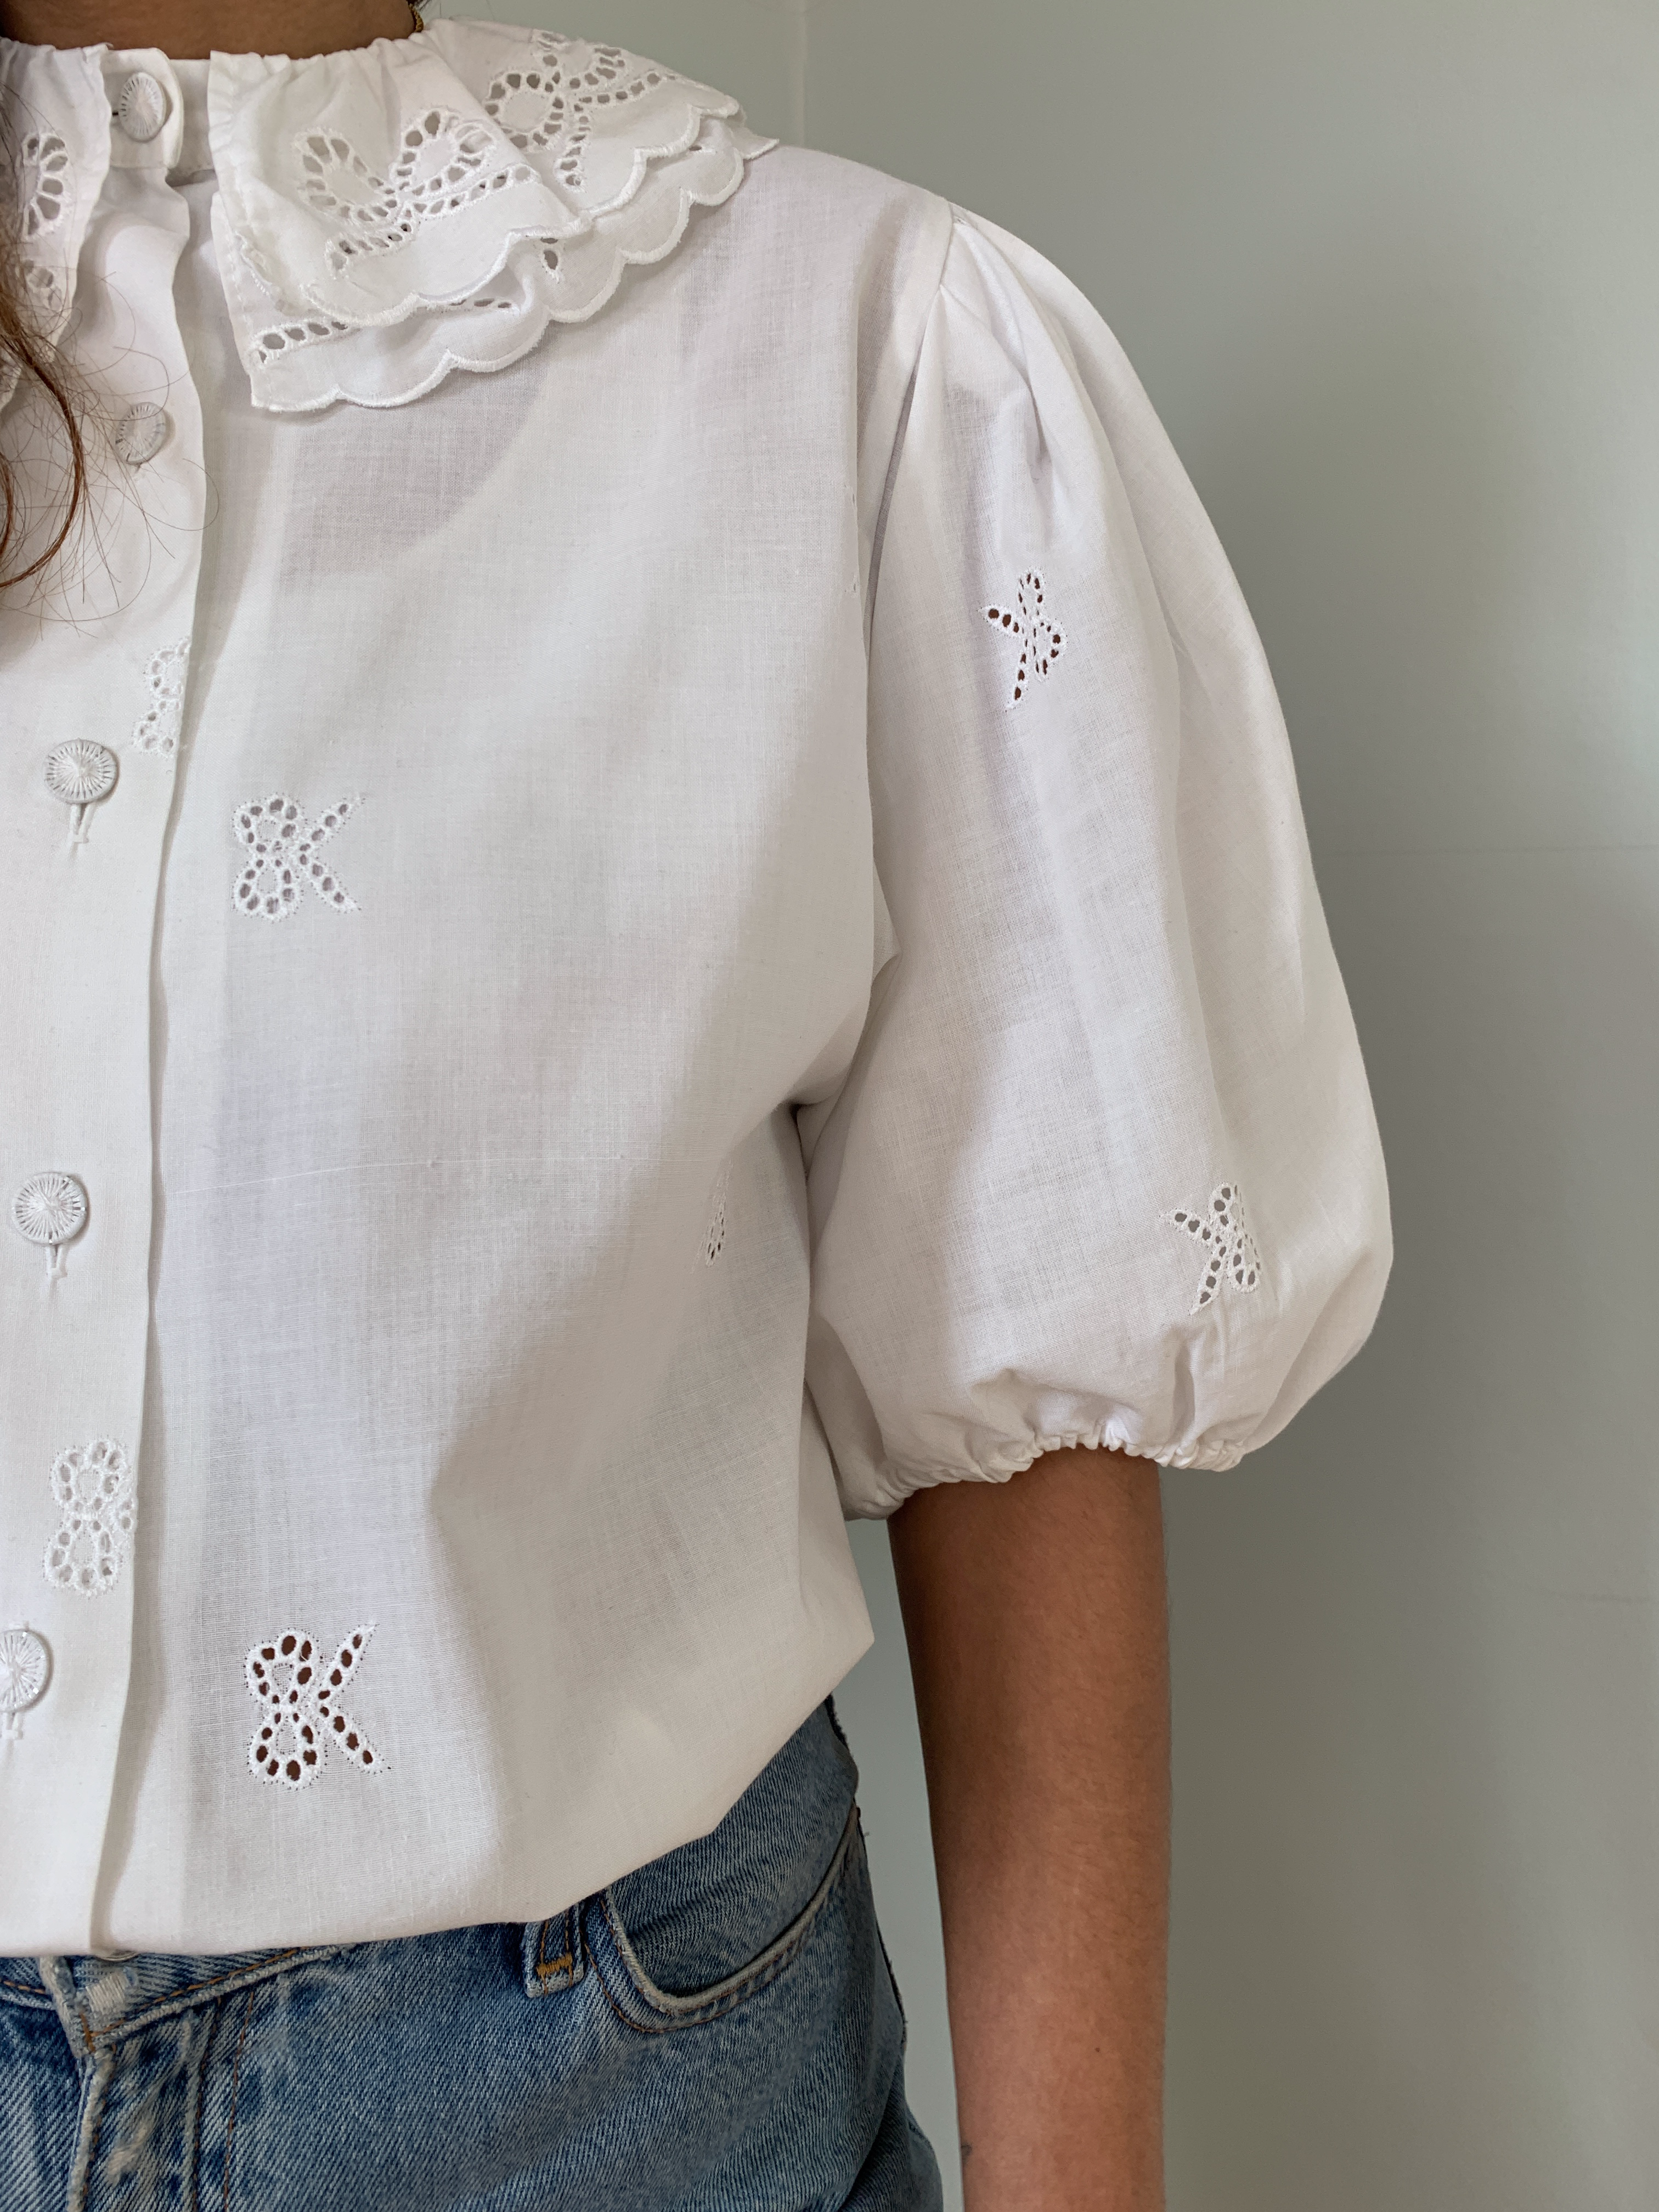 Vintage balloon sleeve blouse with scallop edge collar